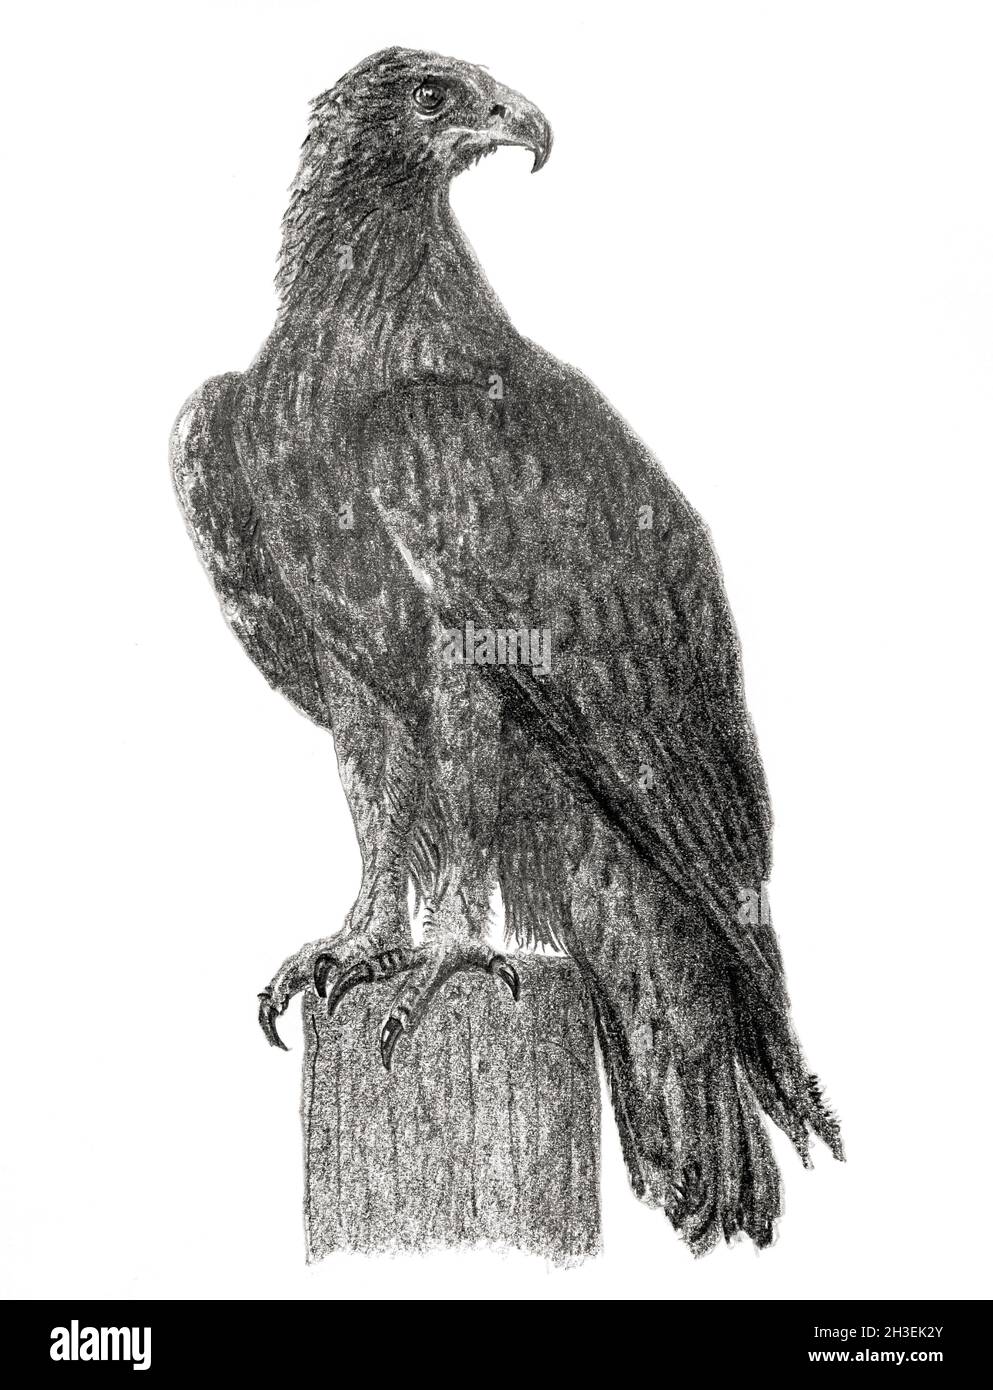 Golden eagle (Aquila chrysaetos) 2020, graphite pencil on paper Stock Photo